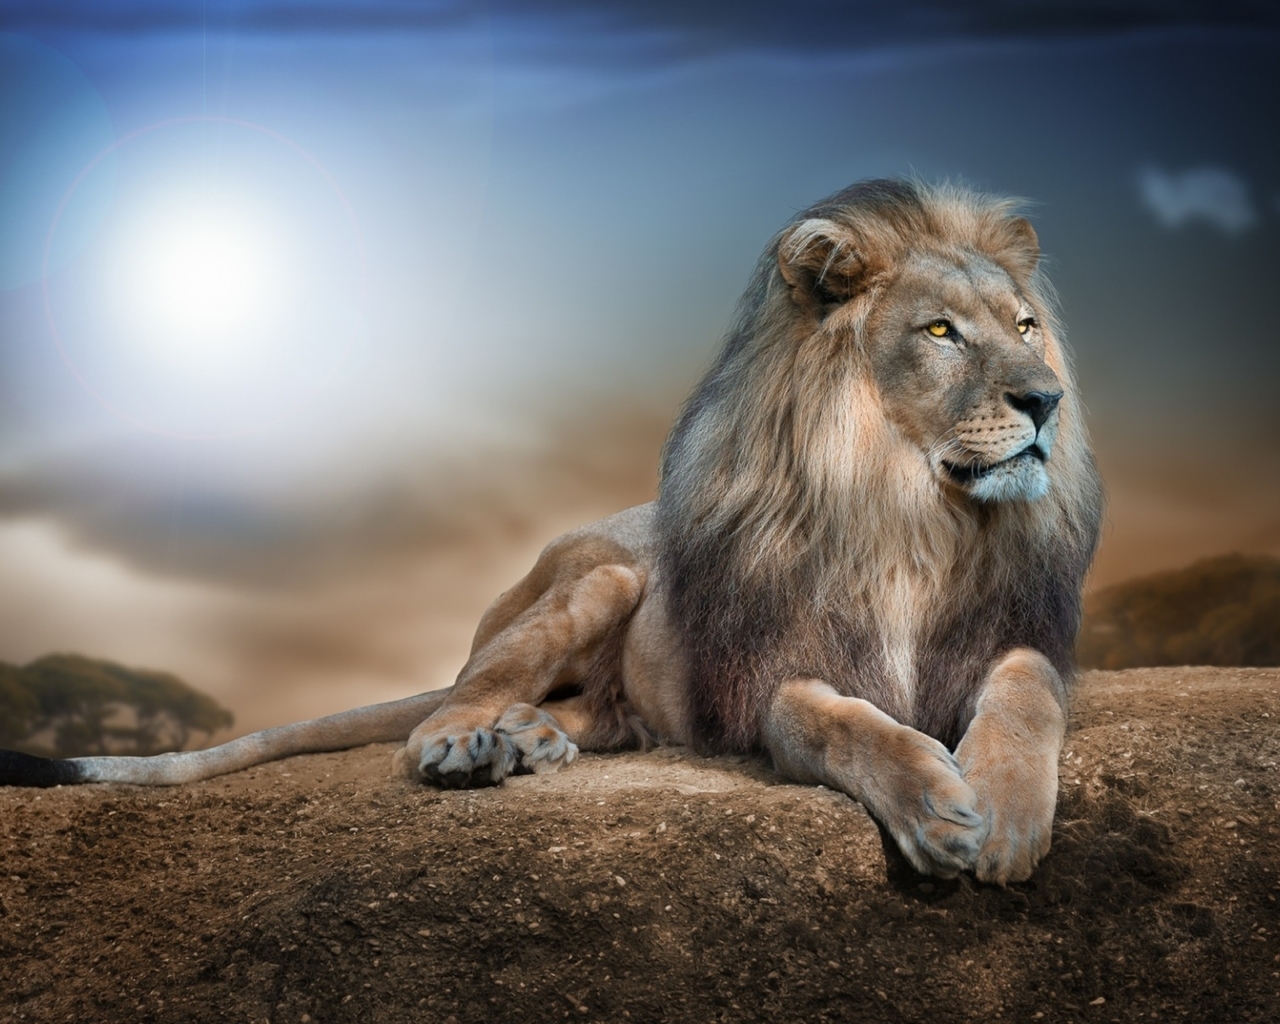 Image: Lion, predator, mane, muzzle, head, eyes, view, feet, tail, lie, hills, sky, lie